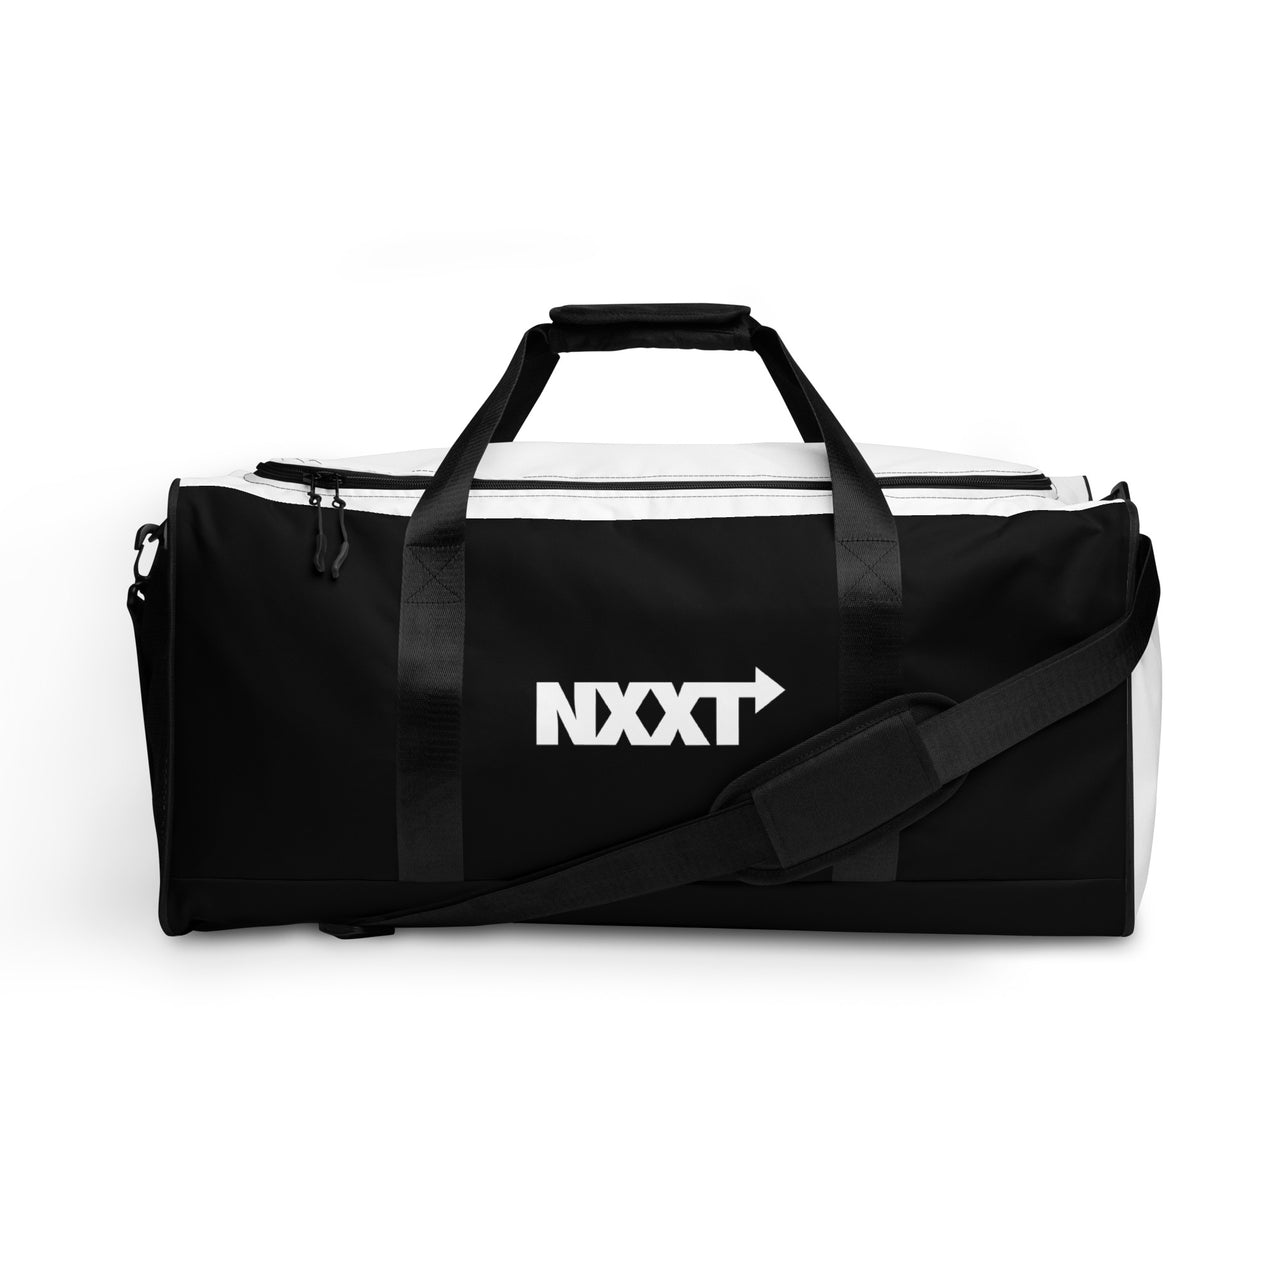 NXXT V.XXIII Duffle bag - Black/White - Shady Lion Coffee Co.